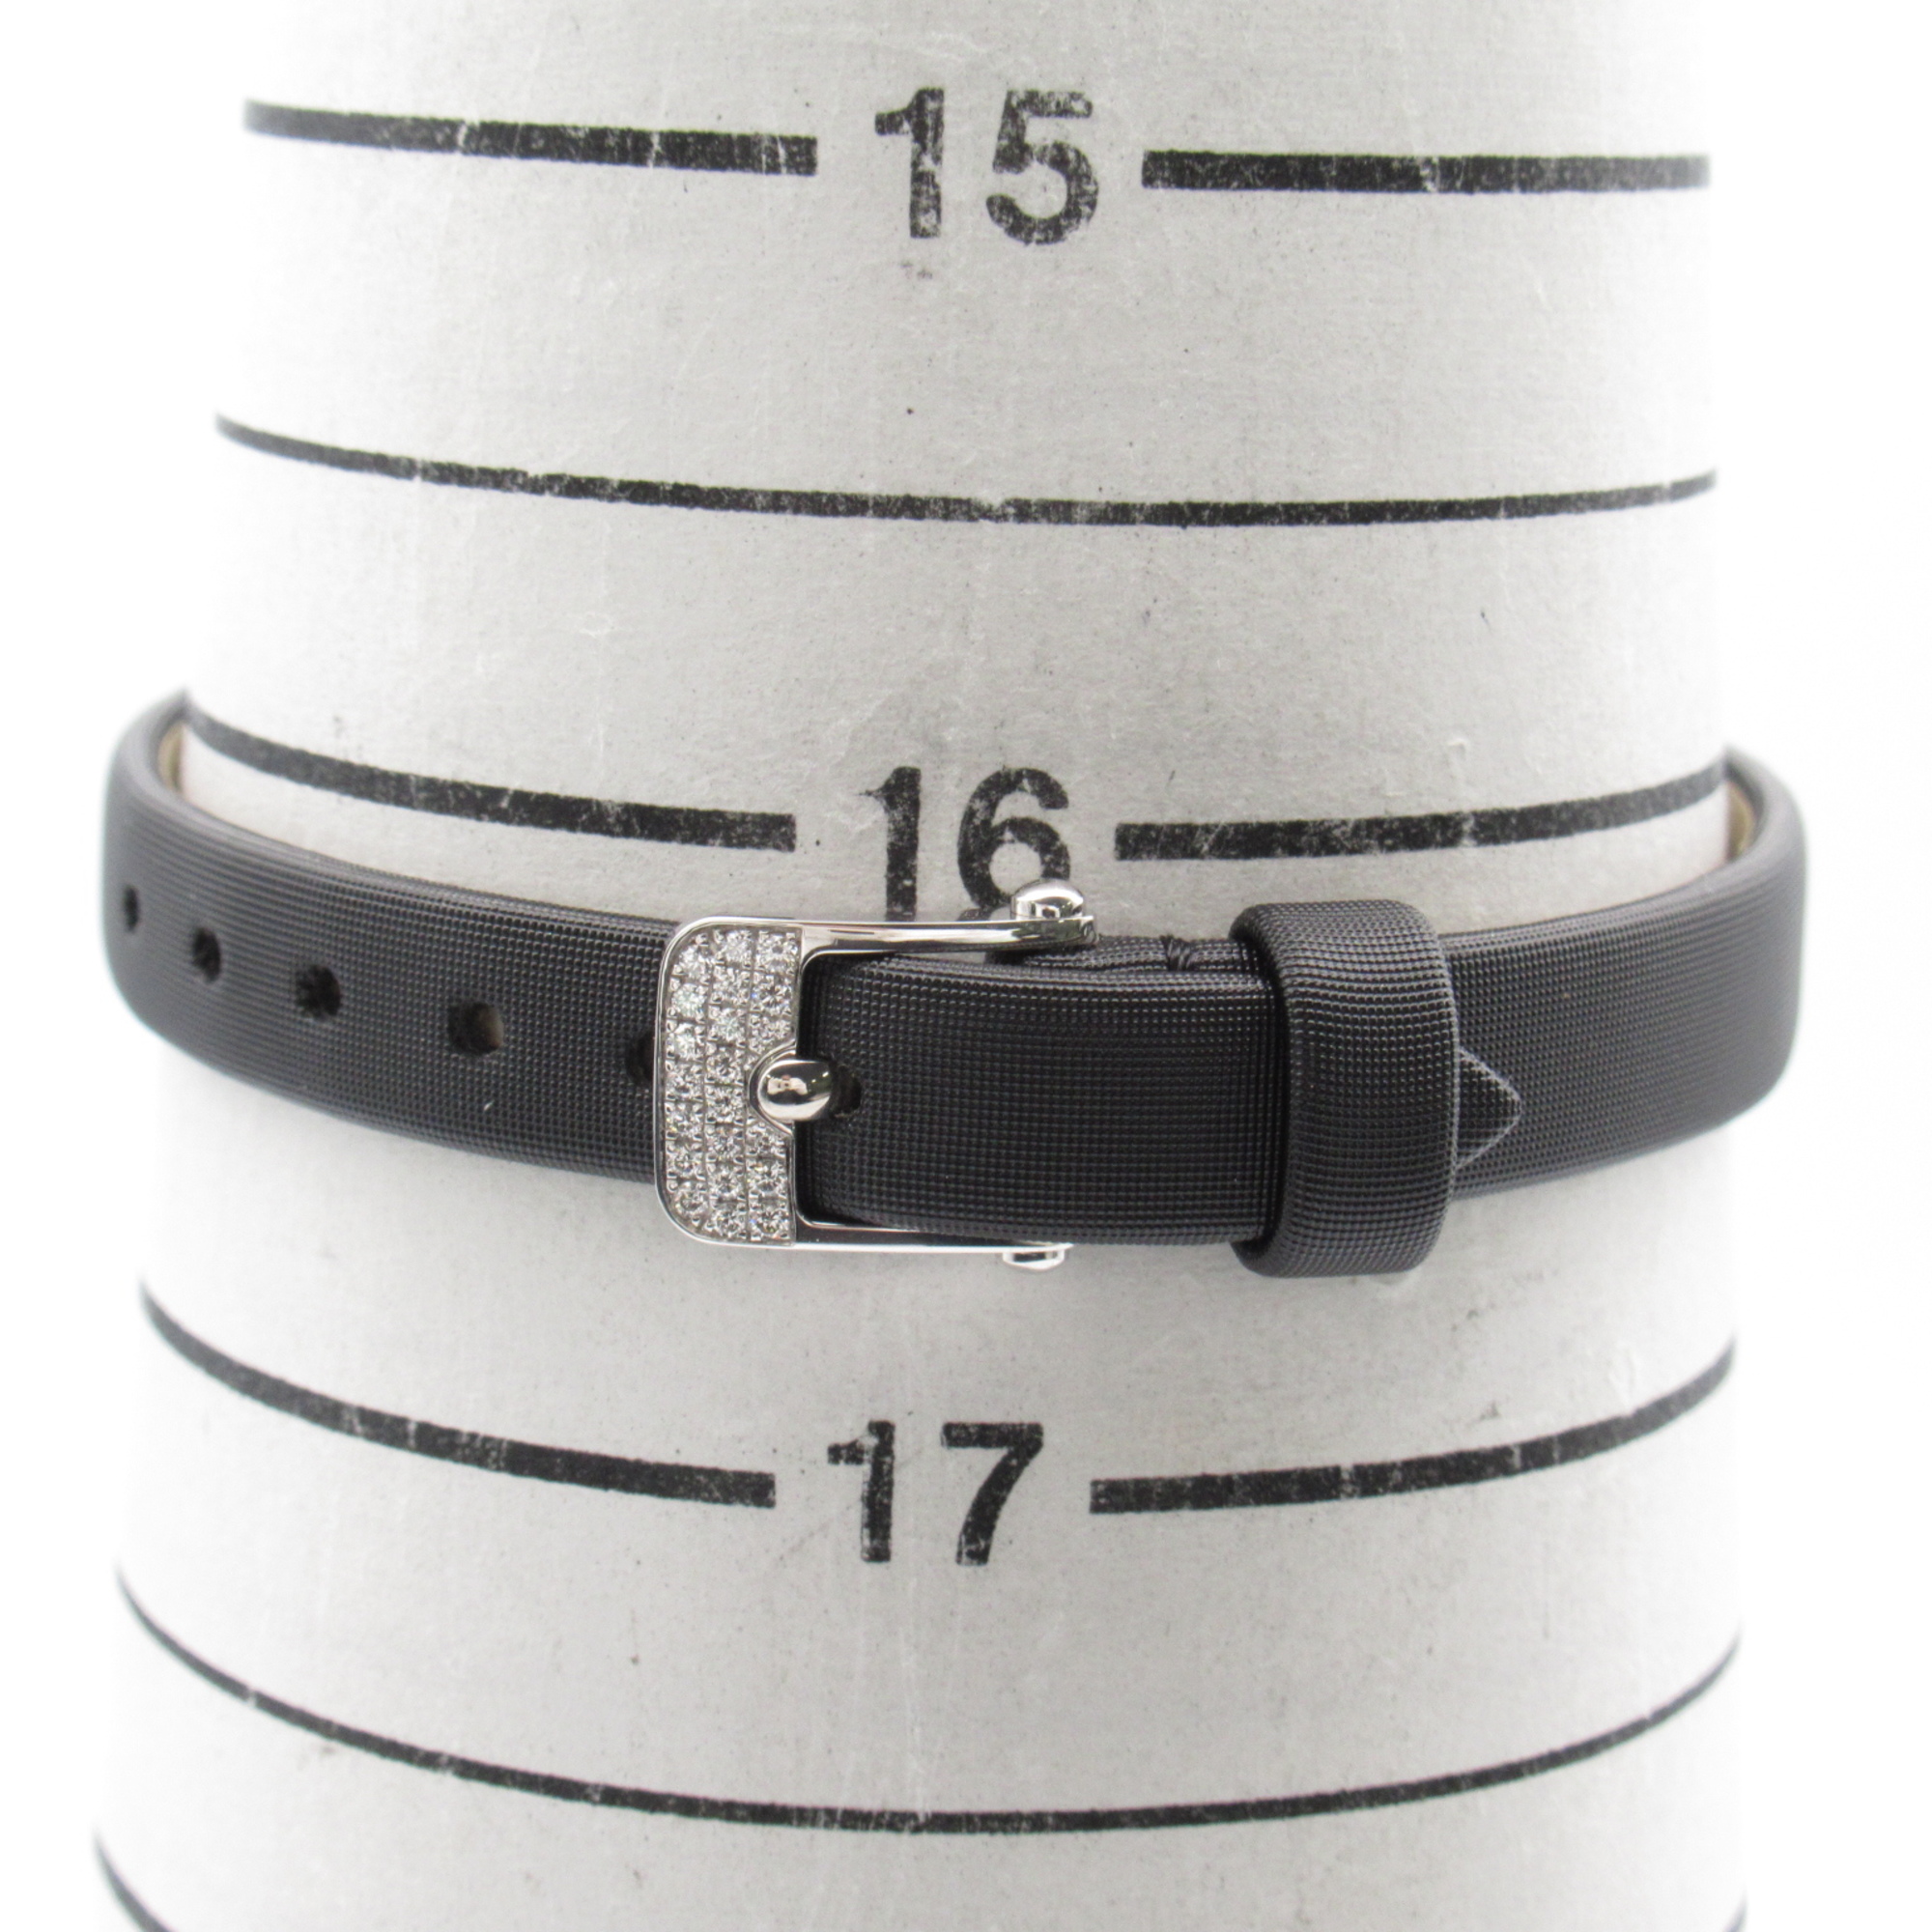 Van Cleef & Arpels charm mini watch Wrist Watch VCARO29900 Quartz Silver  K18WG(WhiteGold) Leather belt VCARO29900